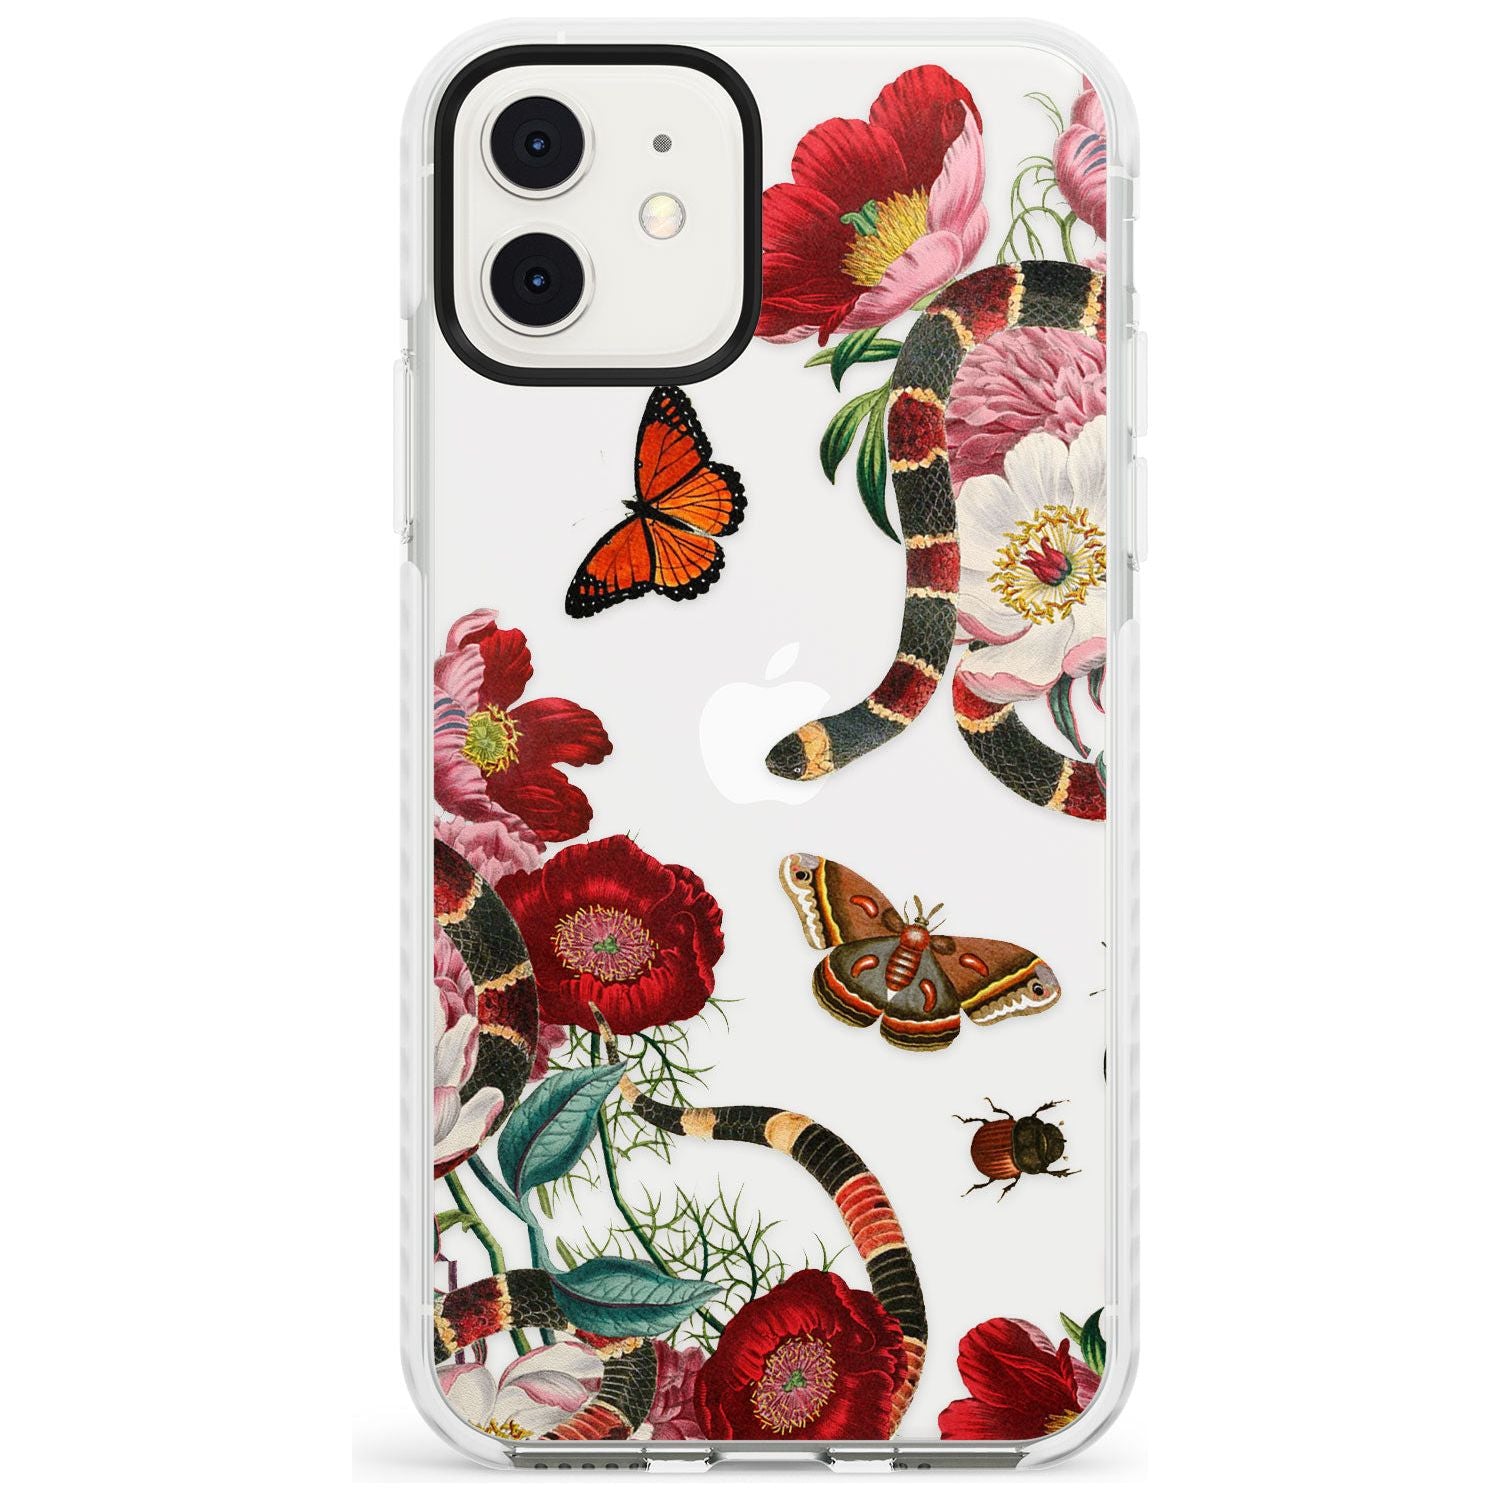 Botanical Snake  Slim TPU Phone Case for iPhone 11